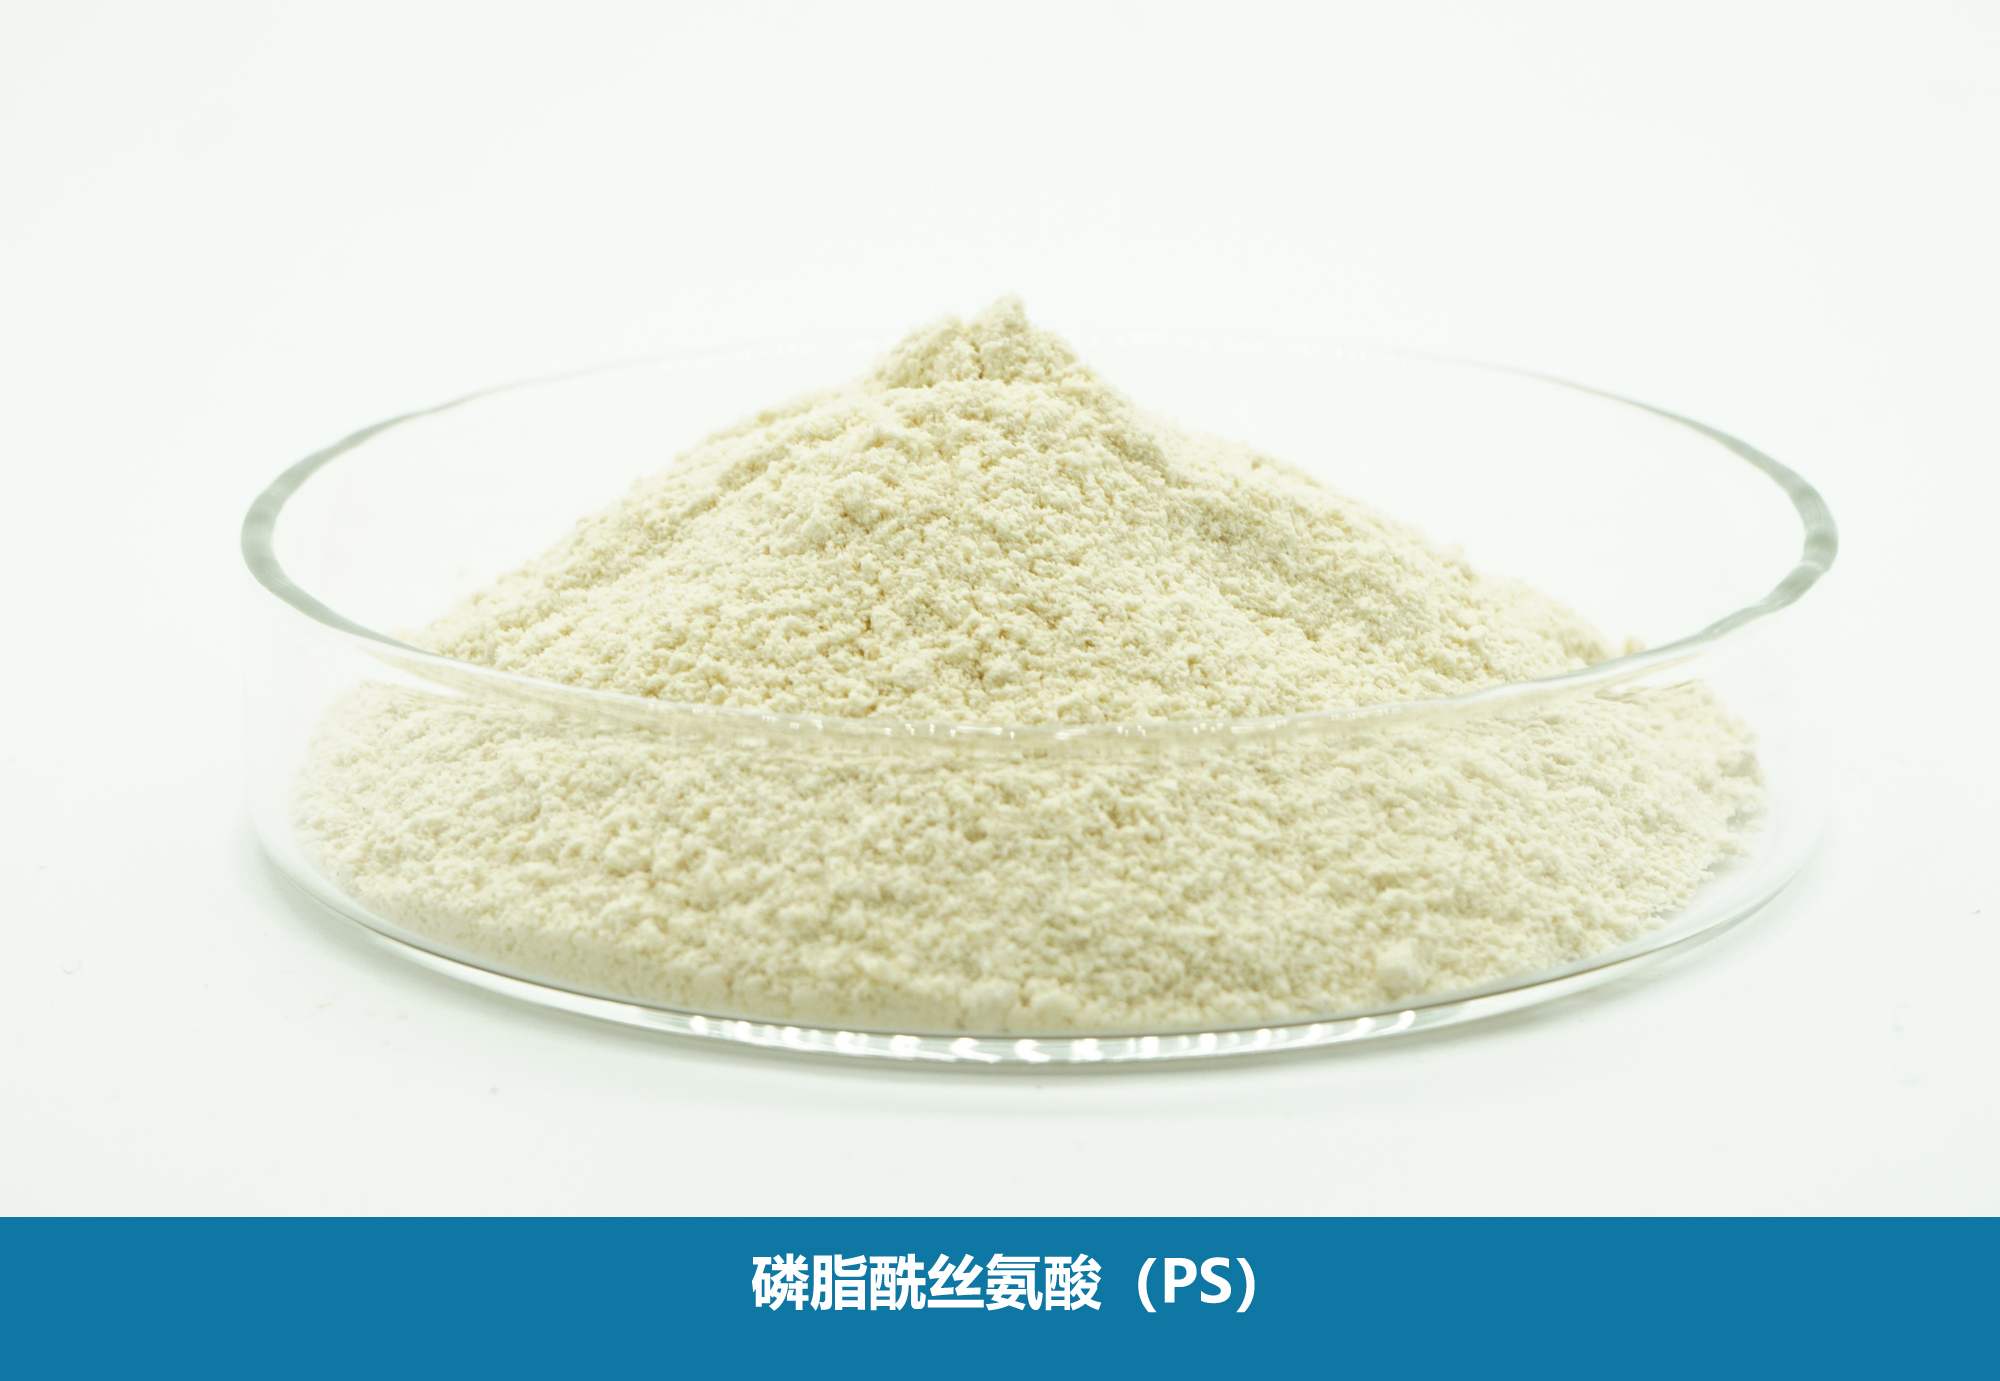 Phosphatidylserine powder 